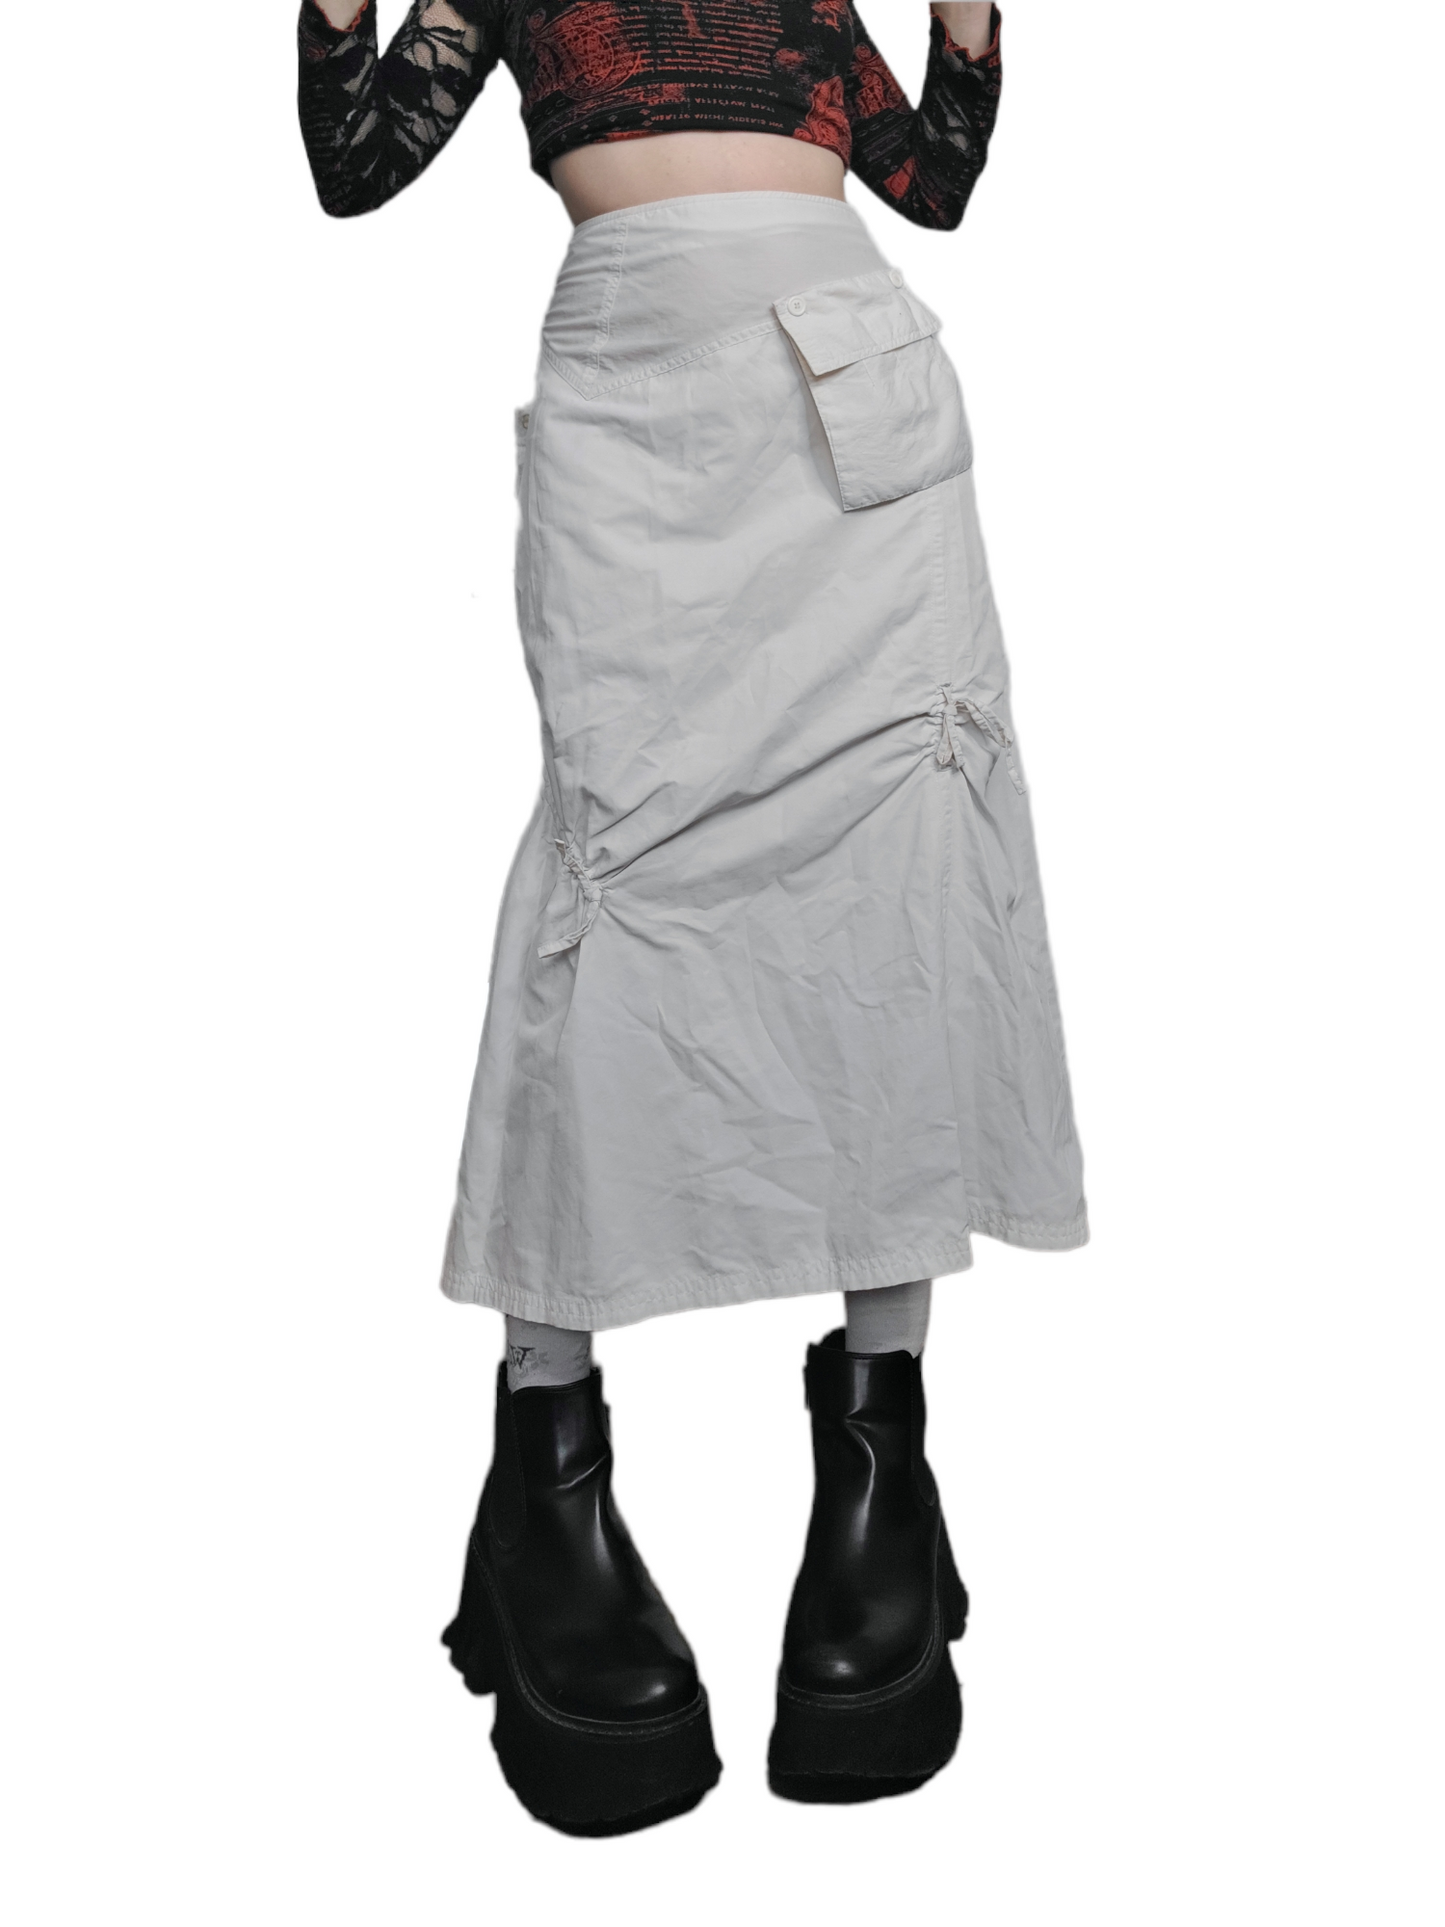 Maxi skirt gorpcore blanche